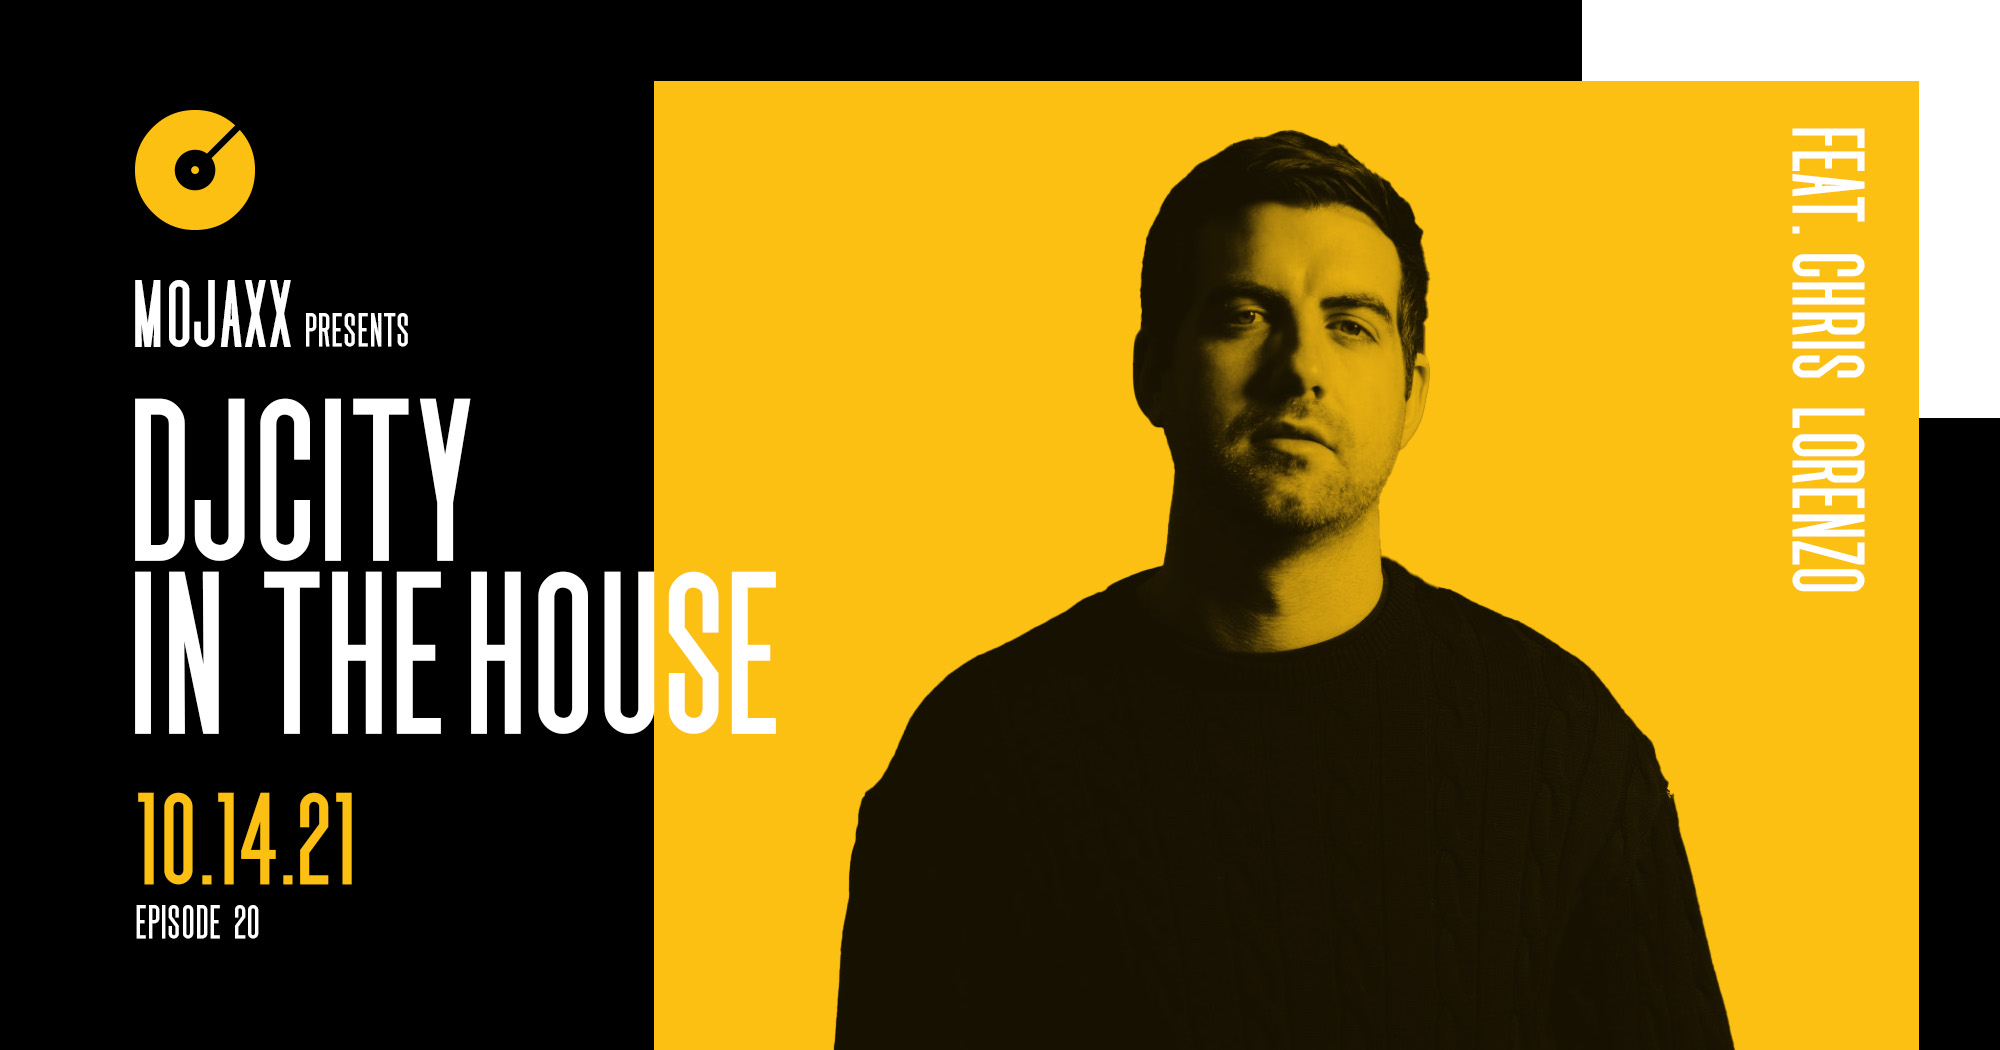 Listen to ‘DJcity in the House’ Feat. Mojaxx: October 14